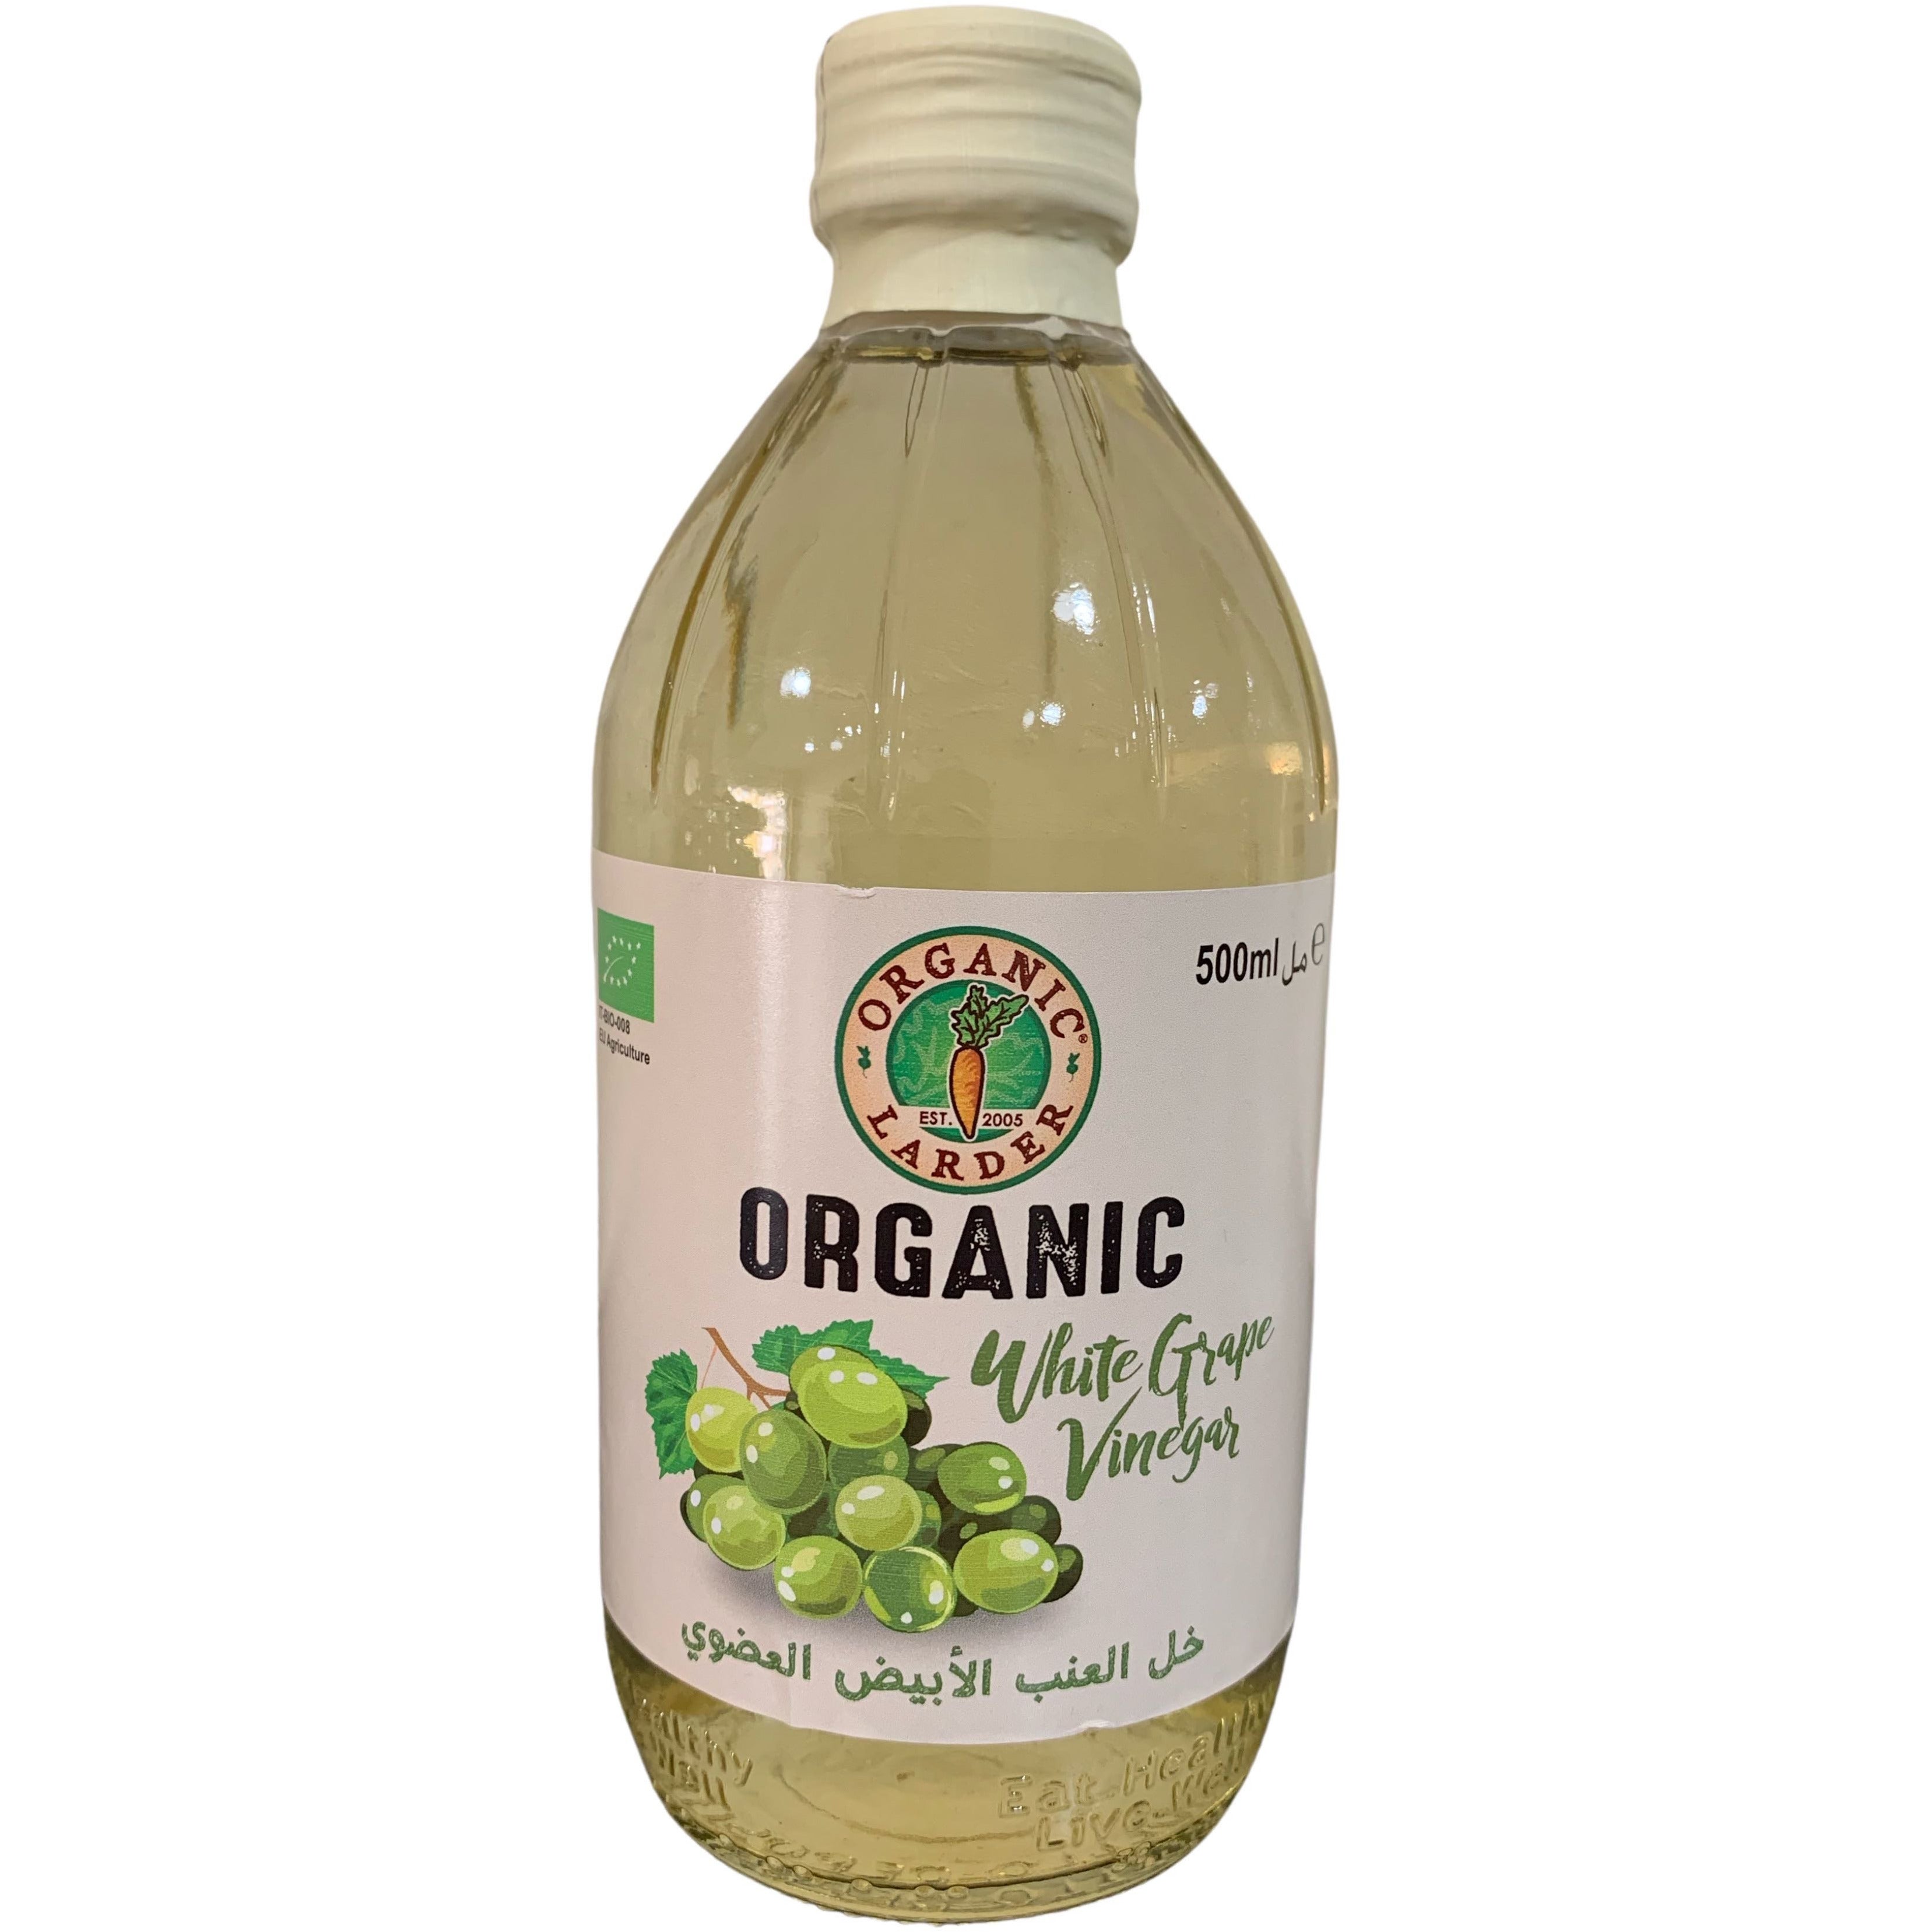 Organic White Grape Vinegar.